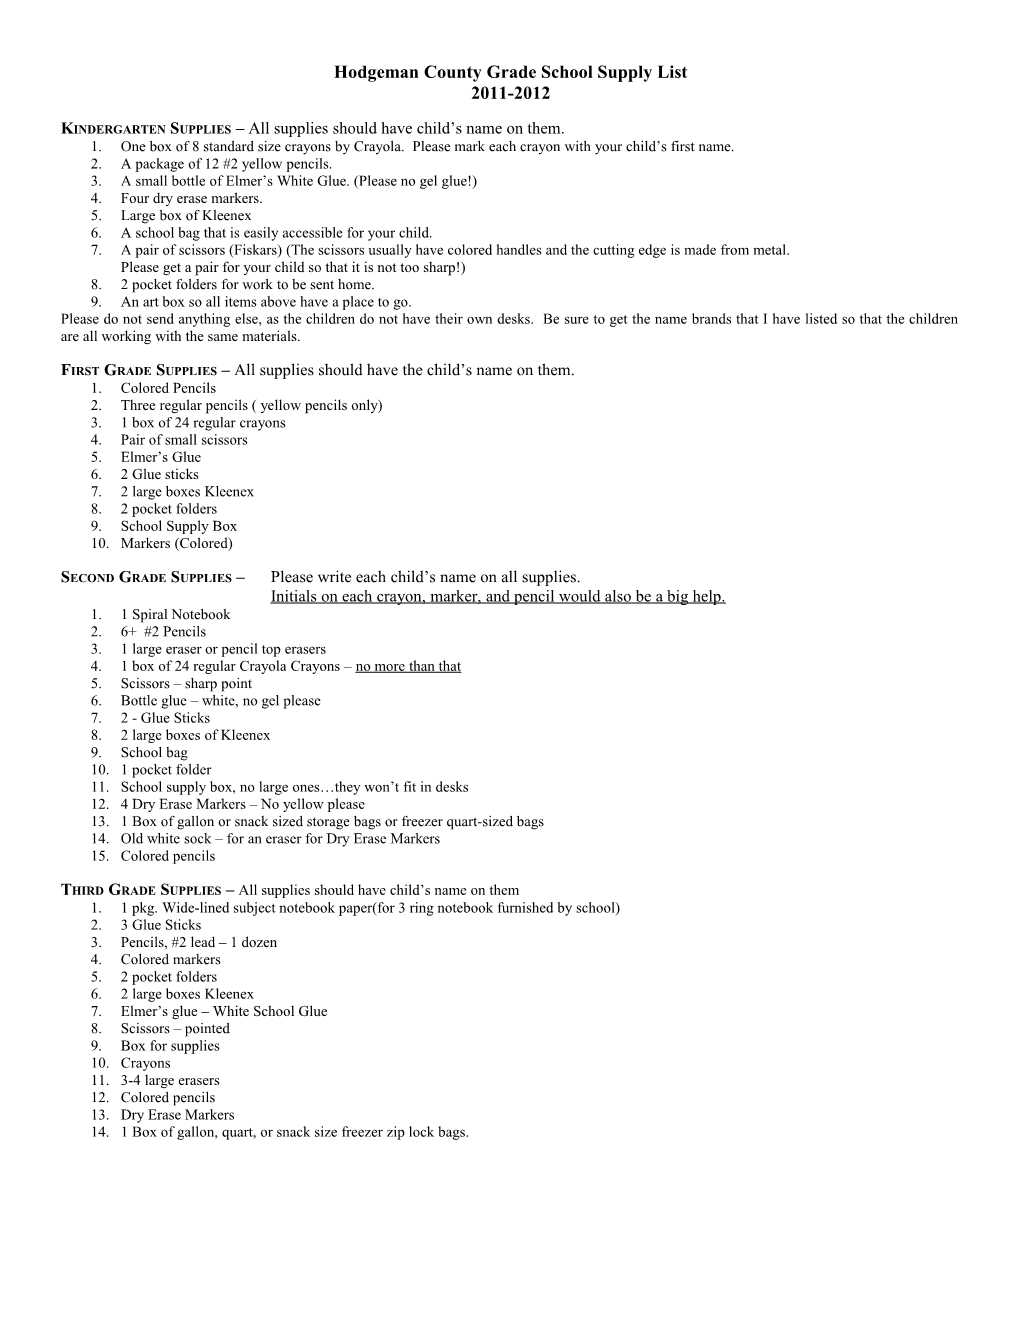 Jetmore Elementary School Supply List